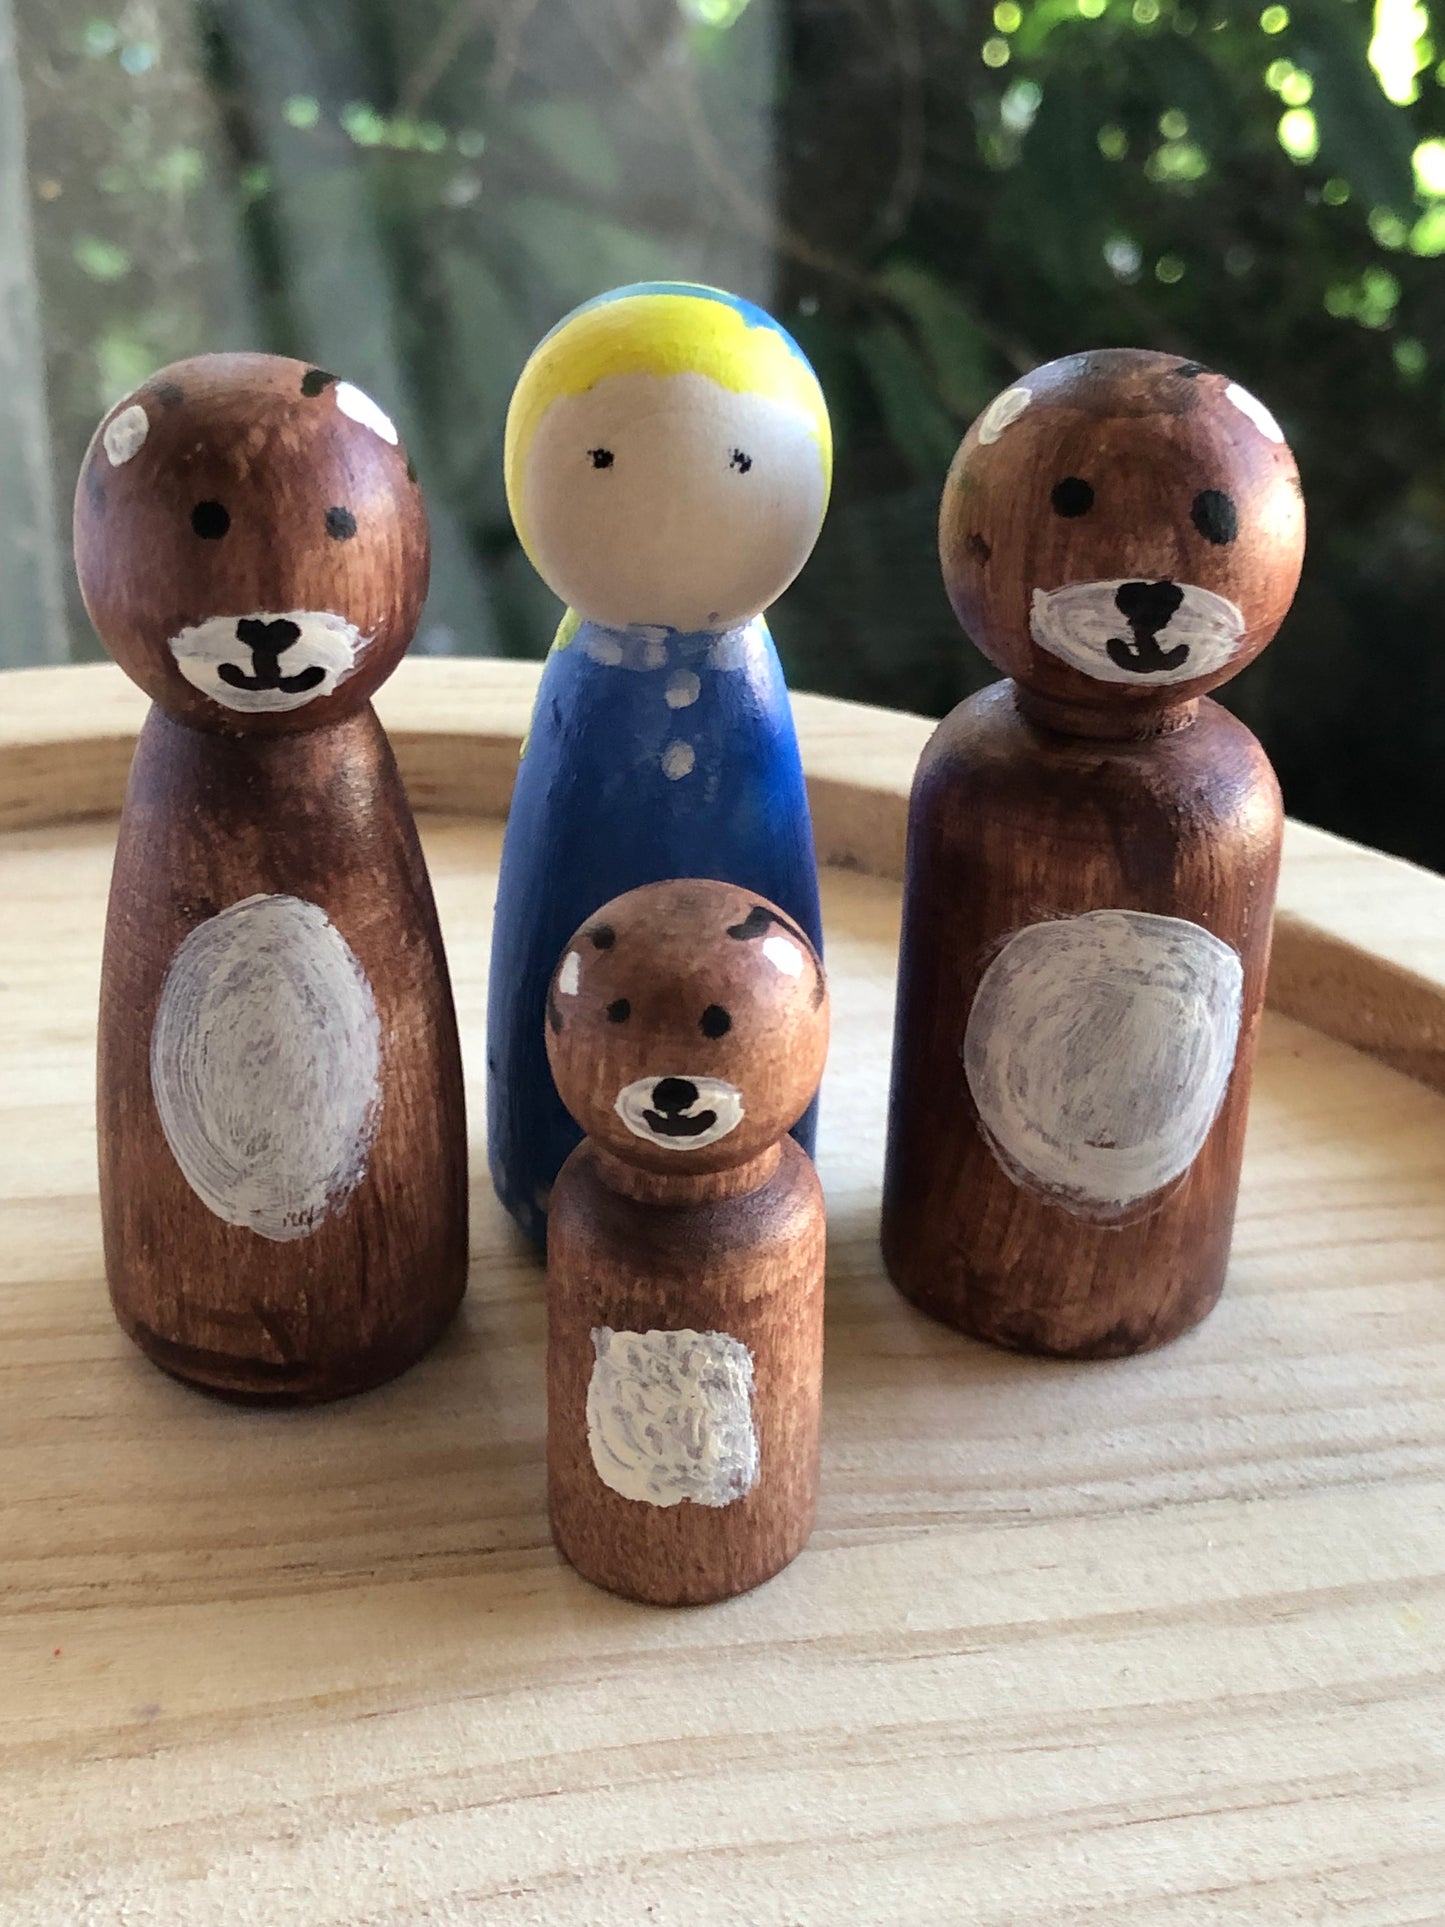 Goldilocks and the Three Bears Set